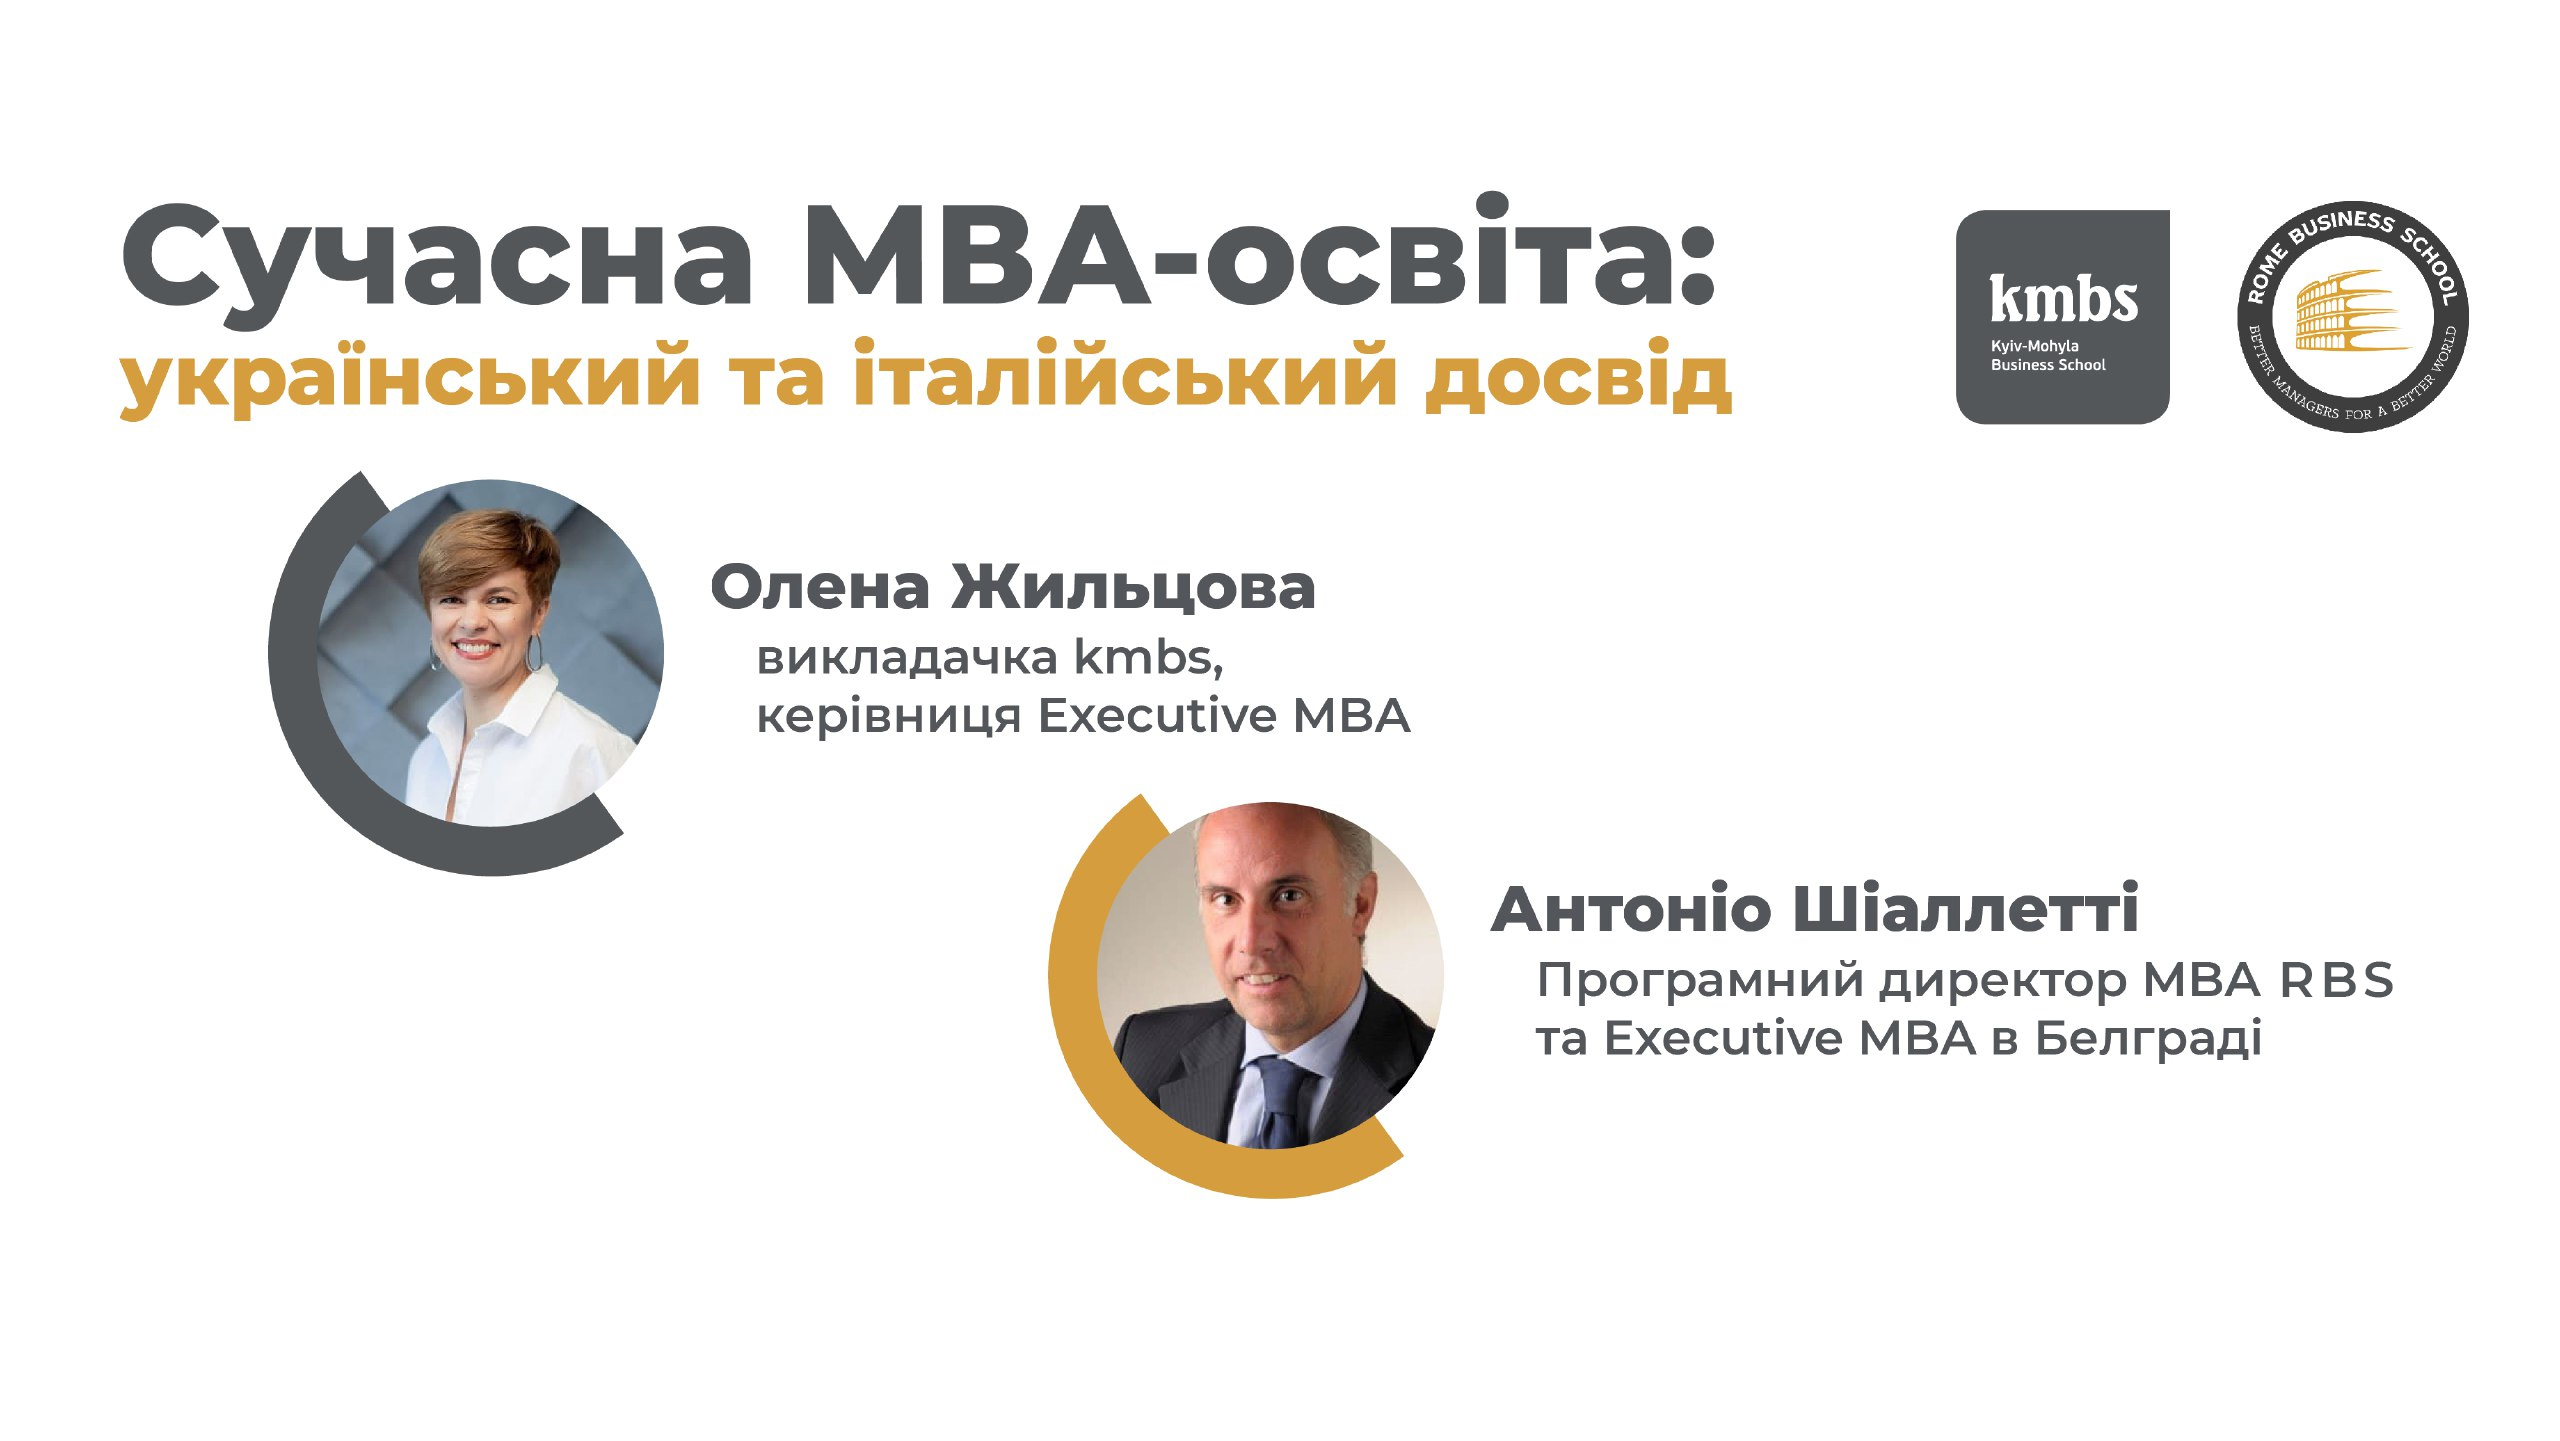 Modern MBA education: Ukrainian and Italian experience